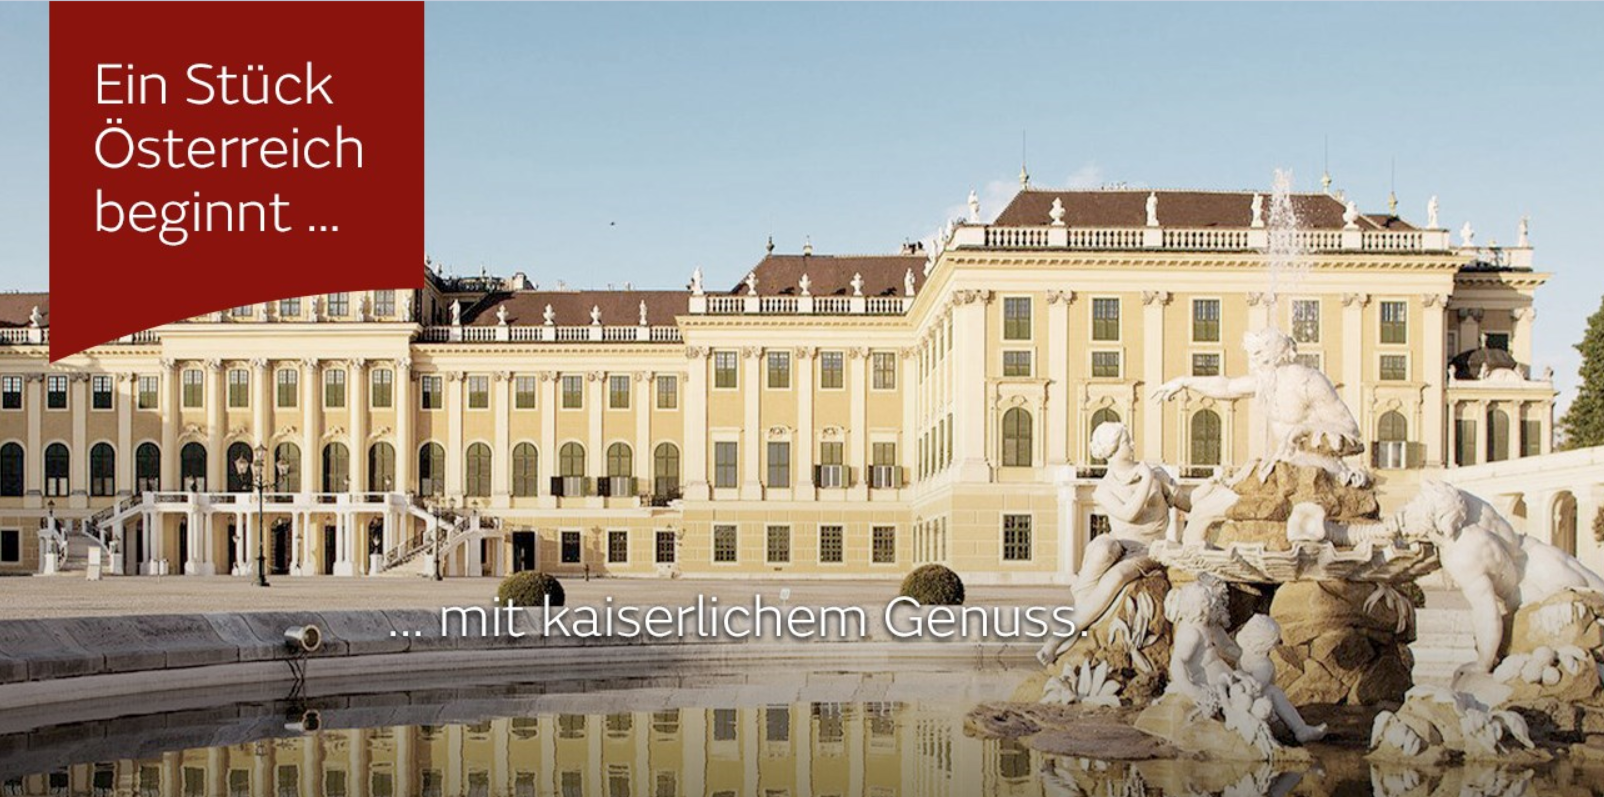 Bilder Austria Trend Schloss Schönbrunn Grand Suite